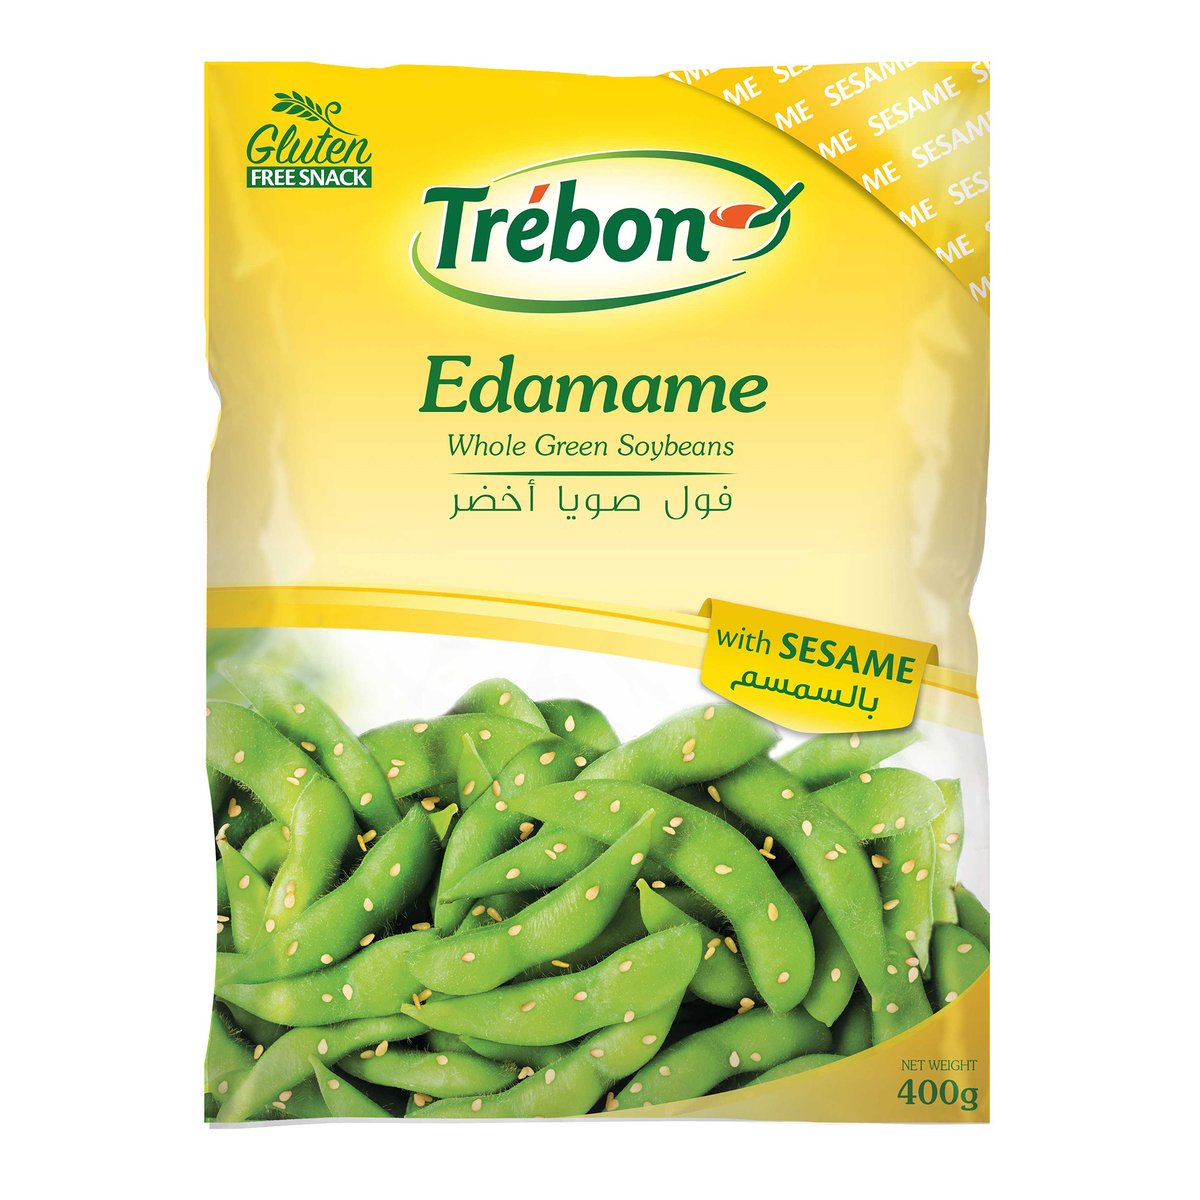 Trebon Edamame Whole Green Soybeans with Sesame Gluten Free 400g